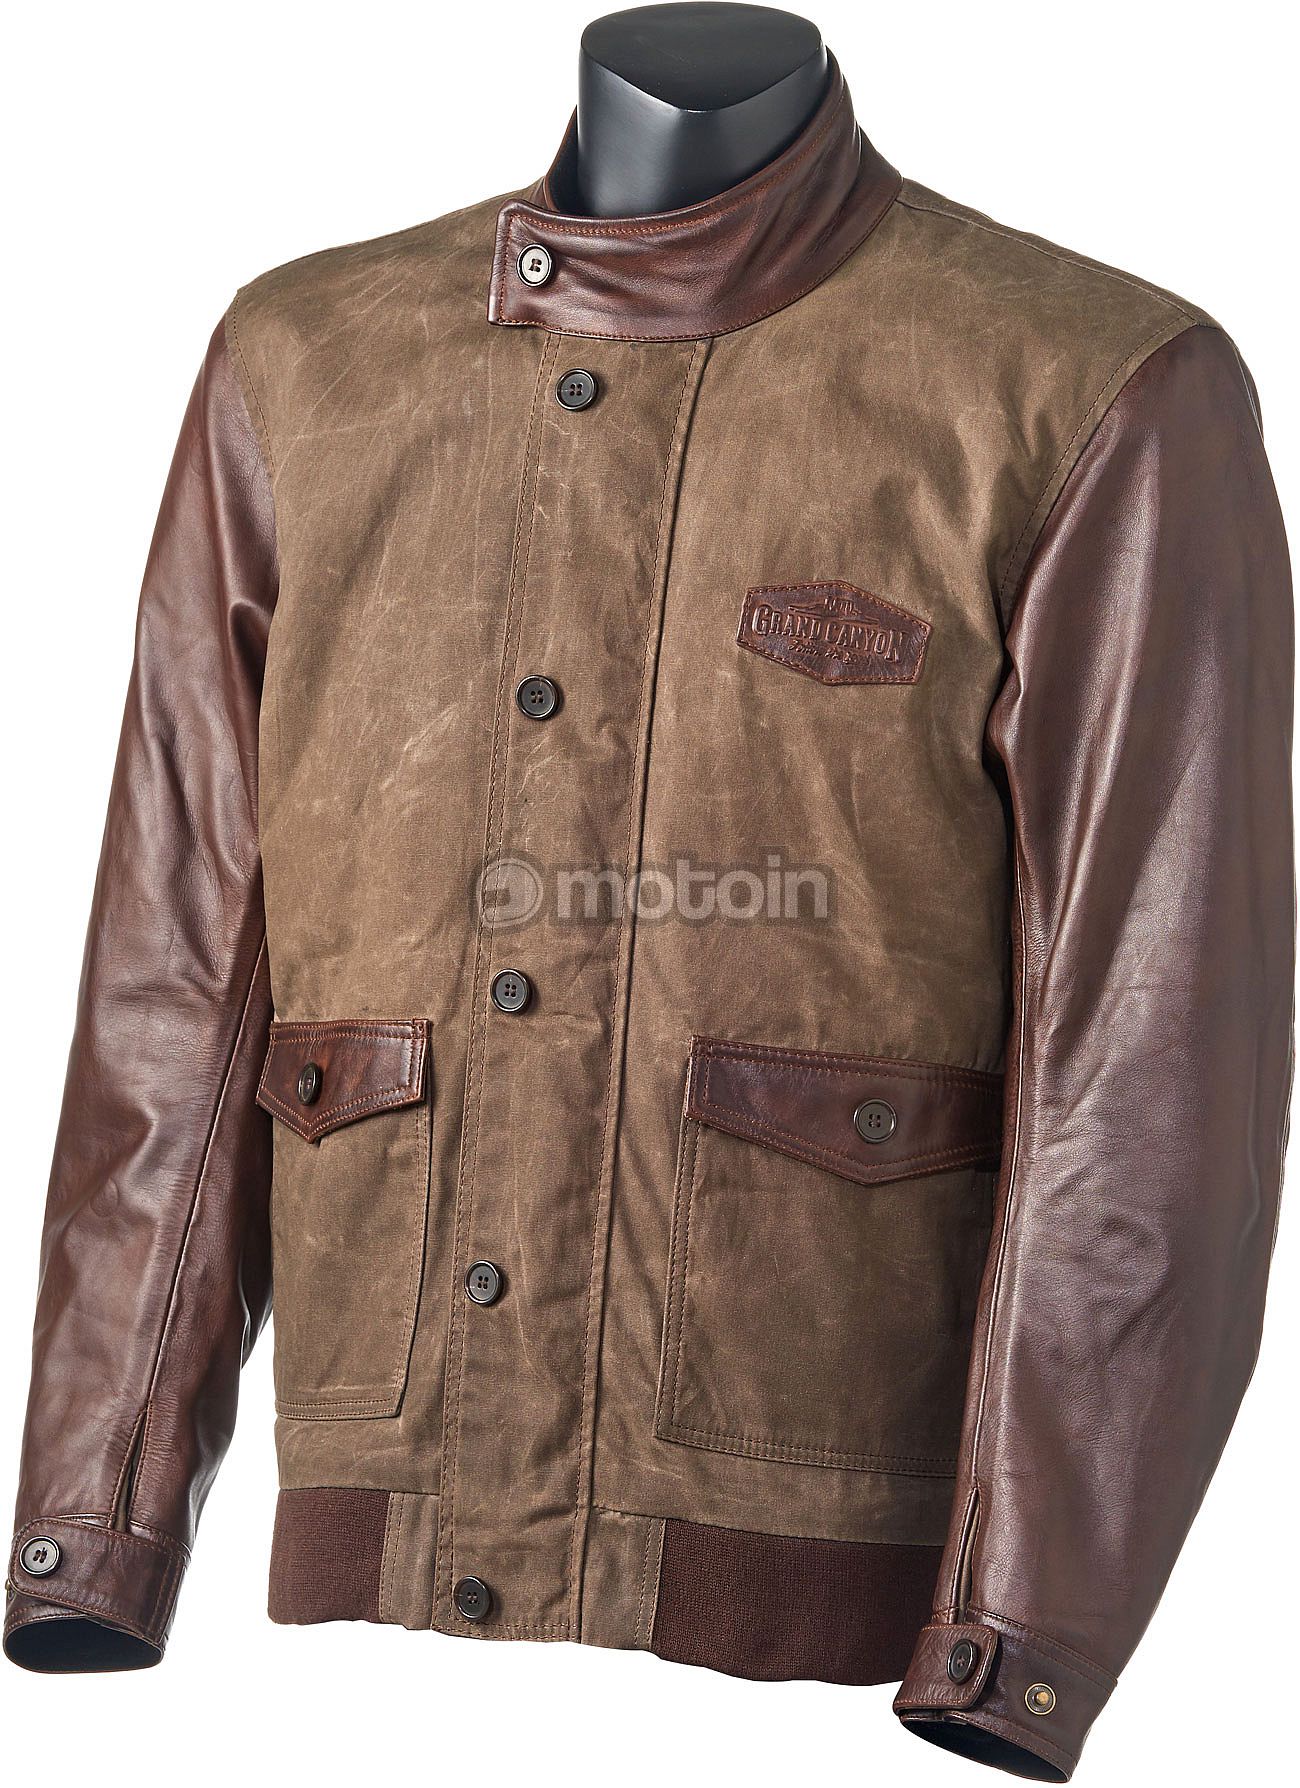 GC Bikewear Hillberry, chaqueta de cuero, textil